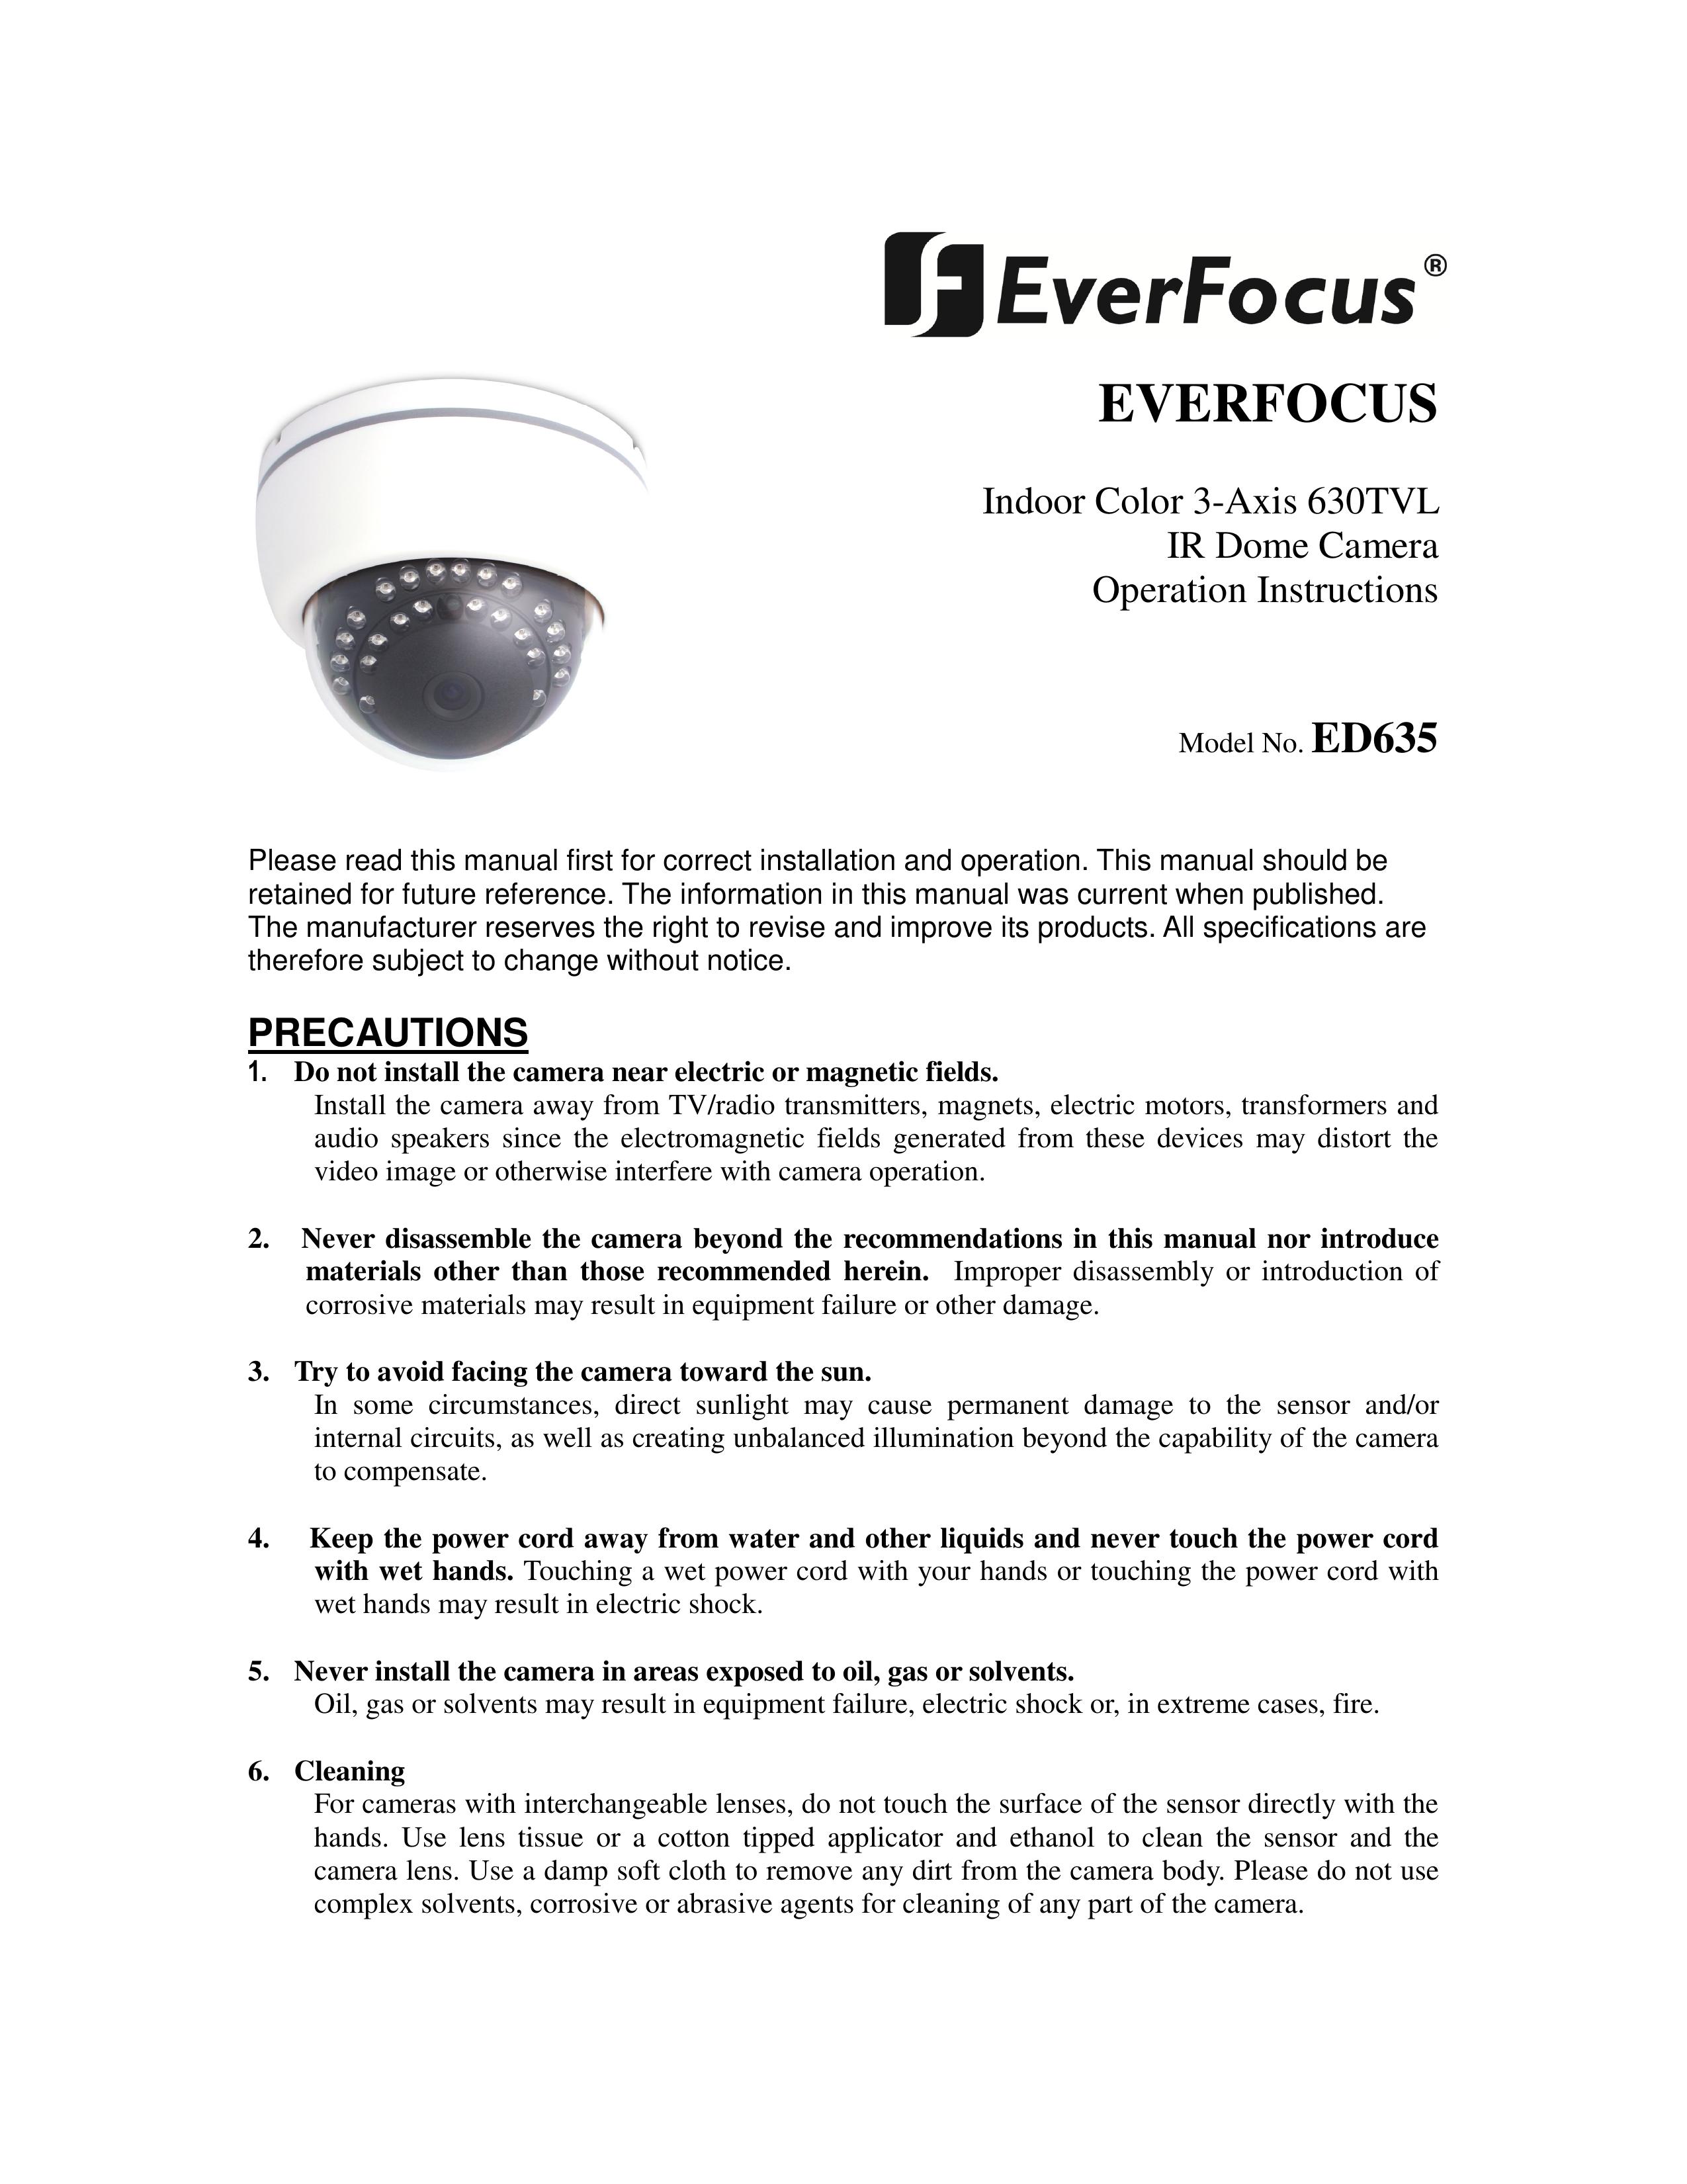 EverFocus ED635 Security Camera User Manual